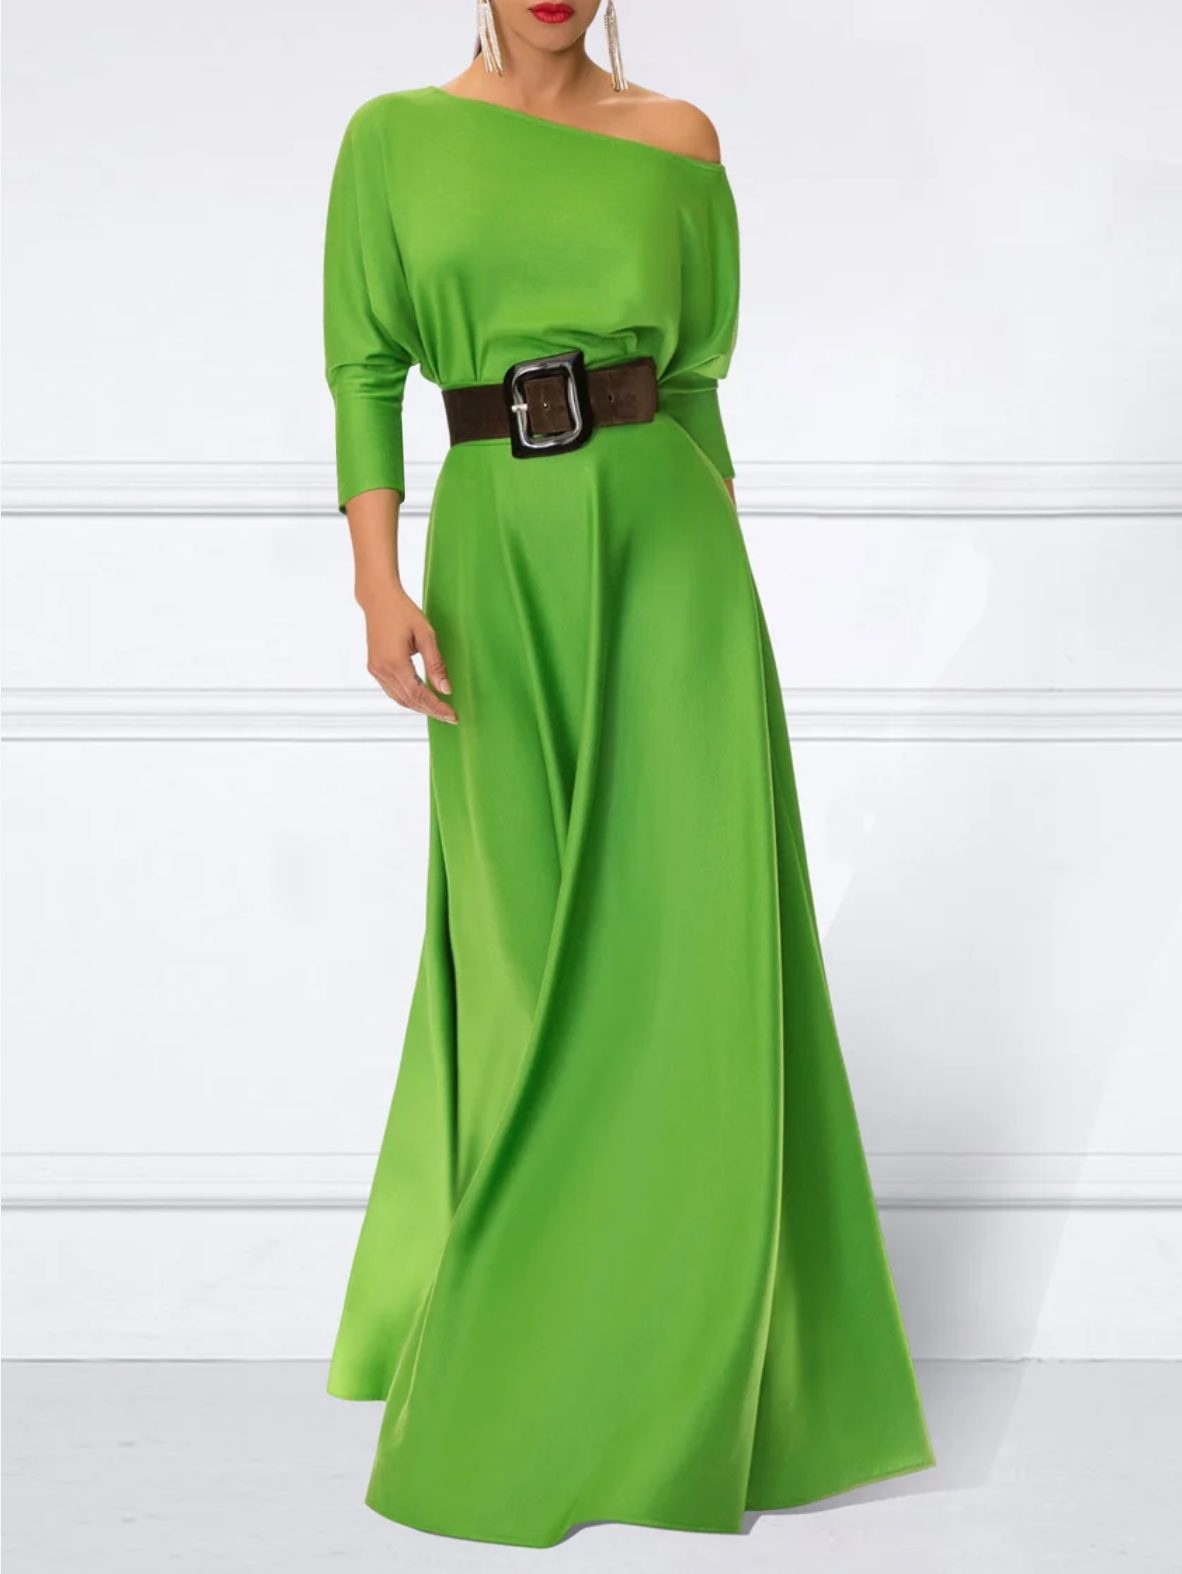 xakxx Loose Three-Quarter Sleeves Solid Color Off-The-Shoulder Maxi Dresses